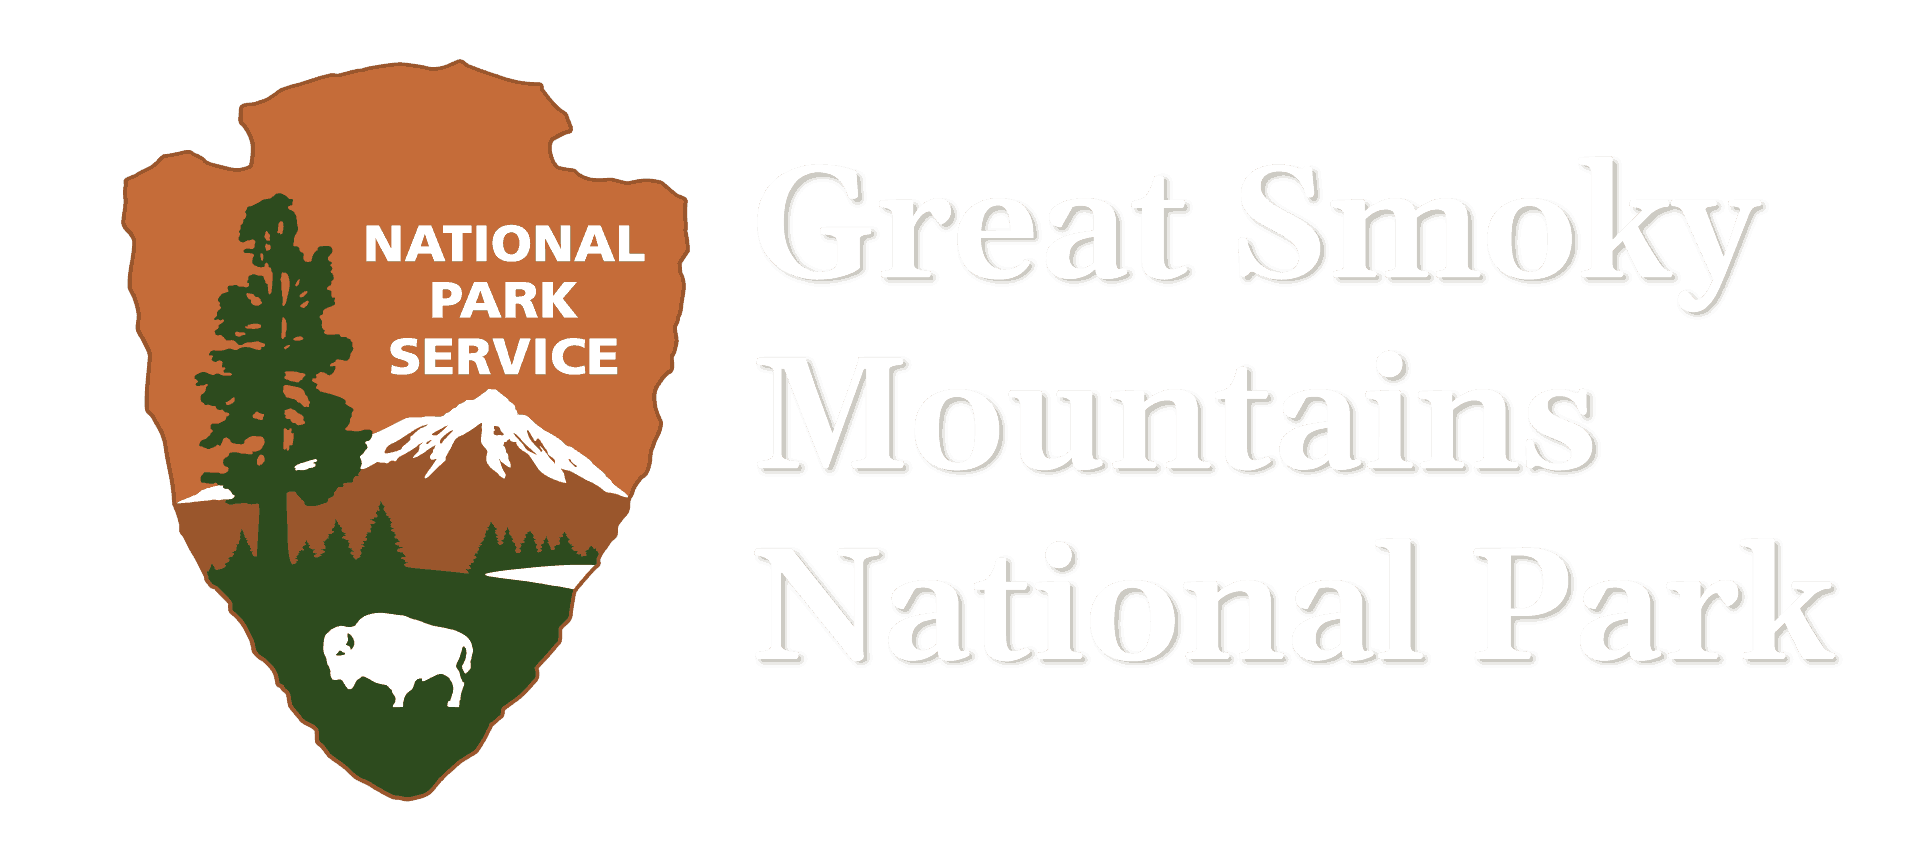 Great Smoky Mountains National Park logo